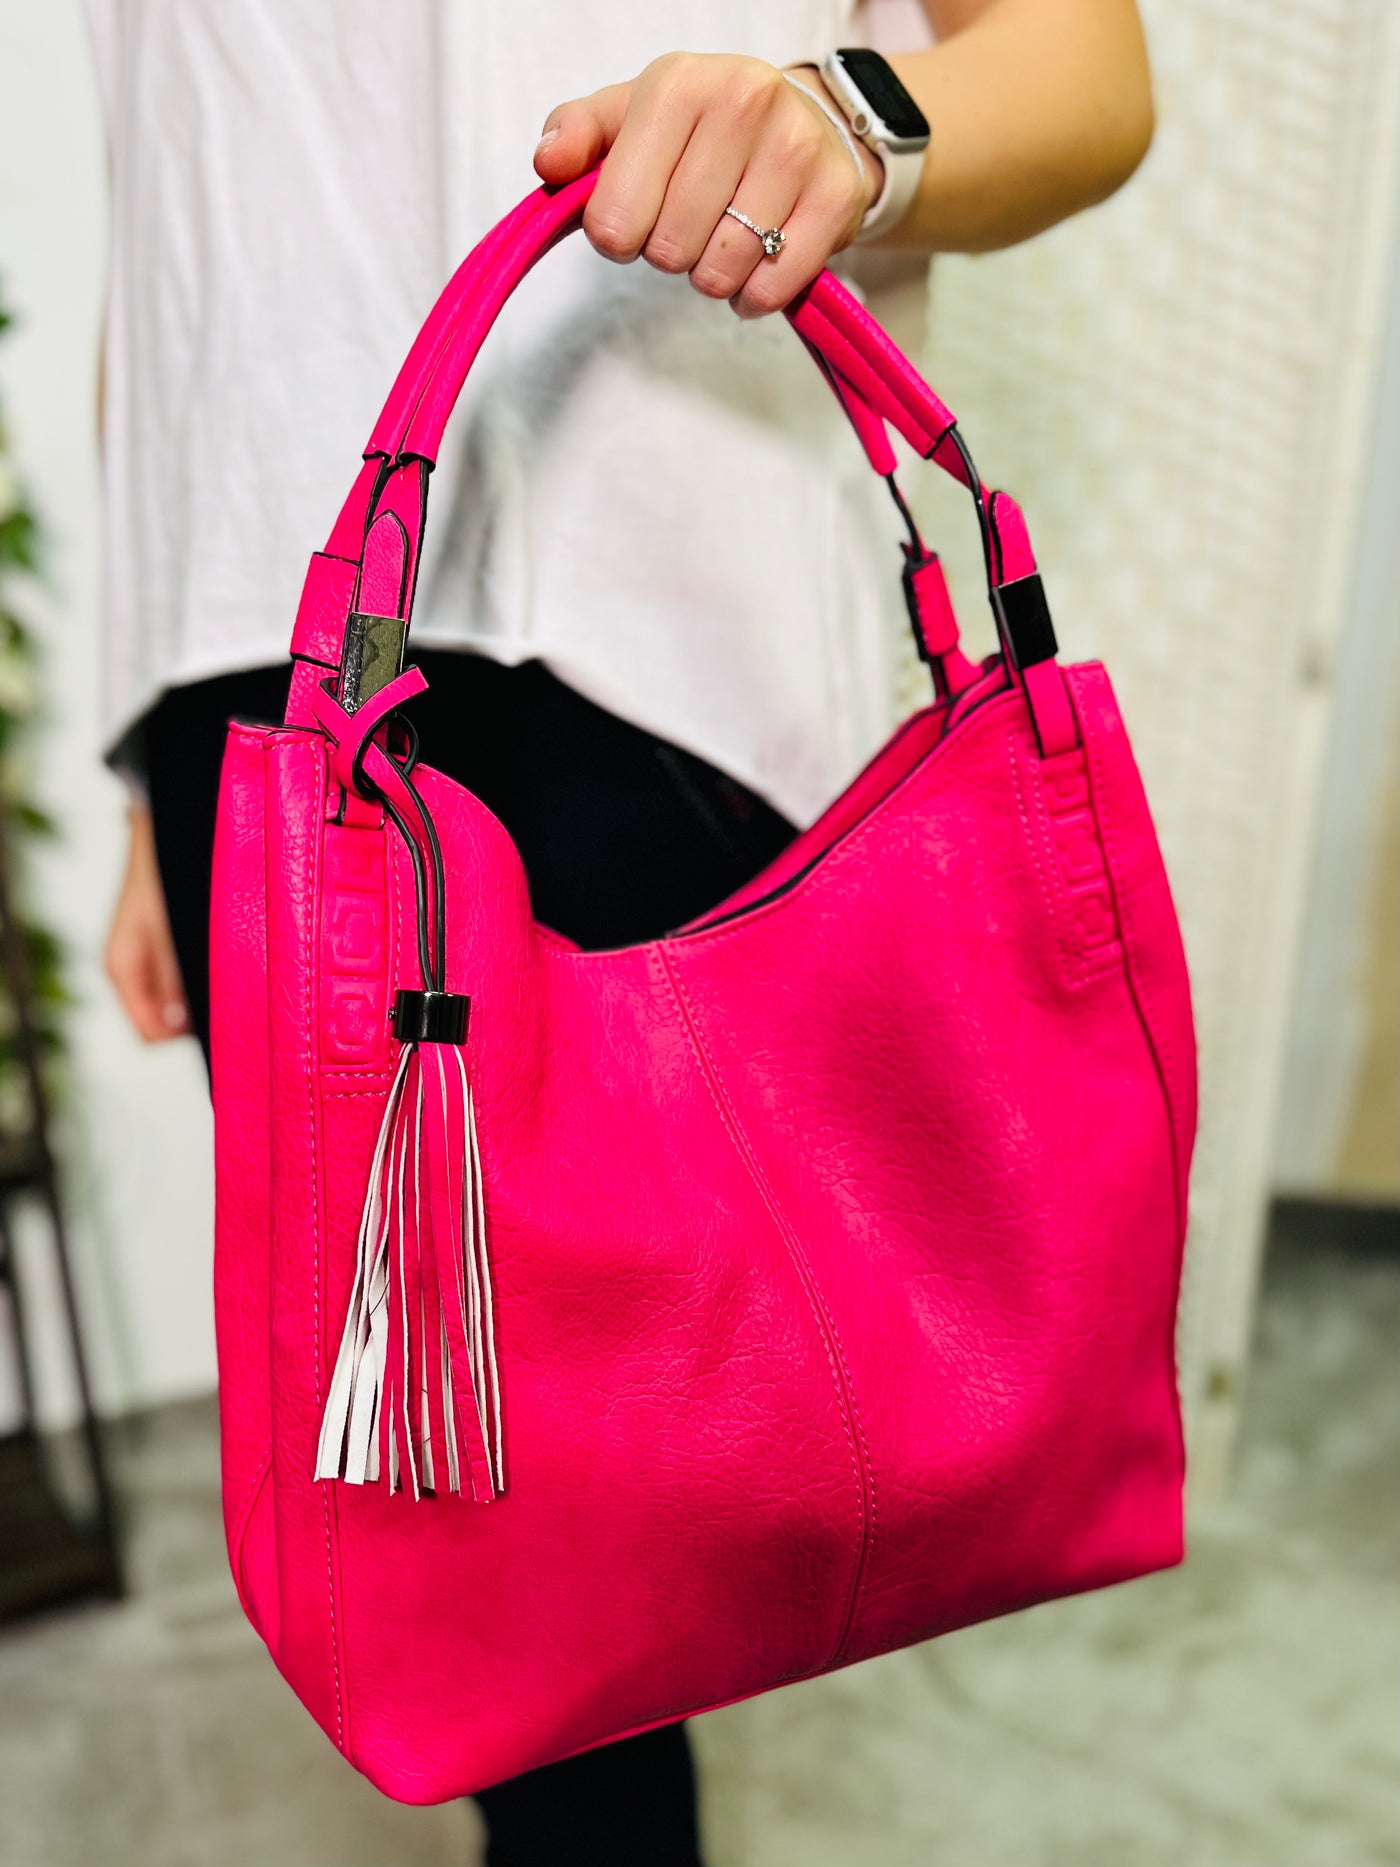 Hobo Handbag-Pink